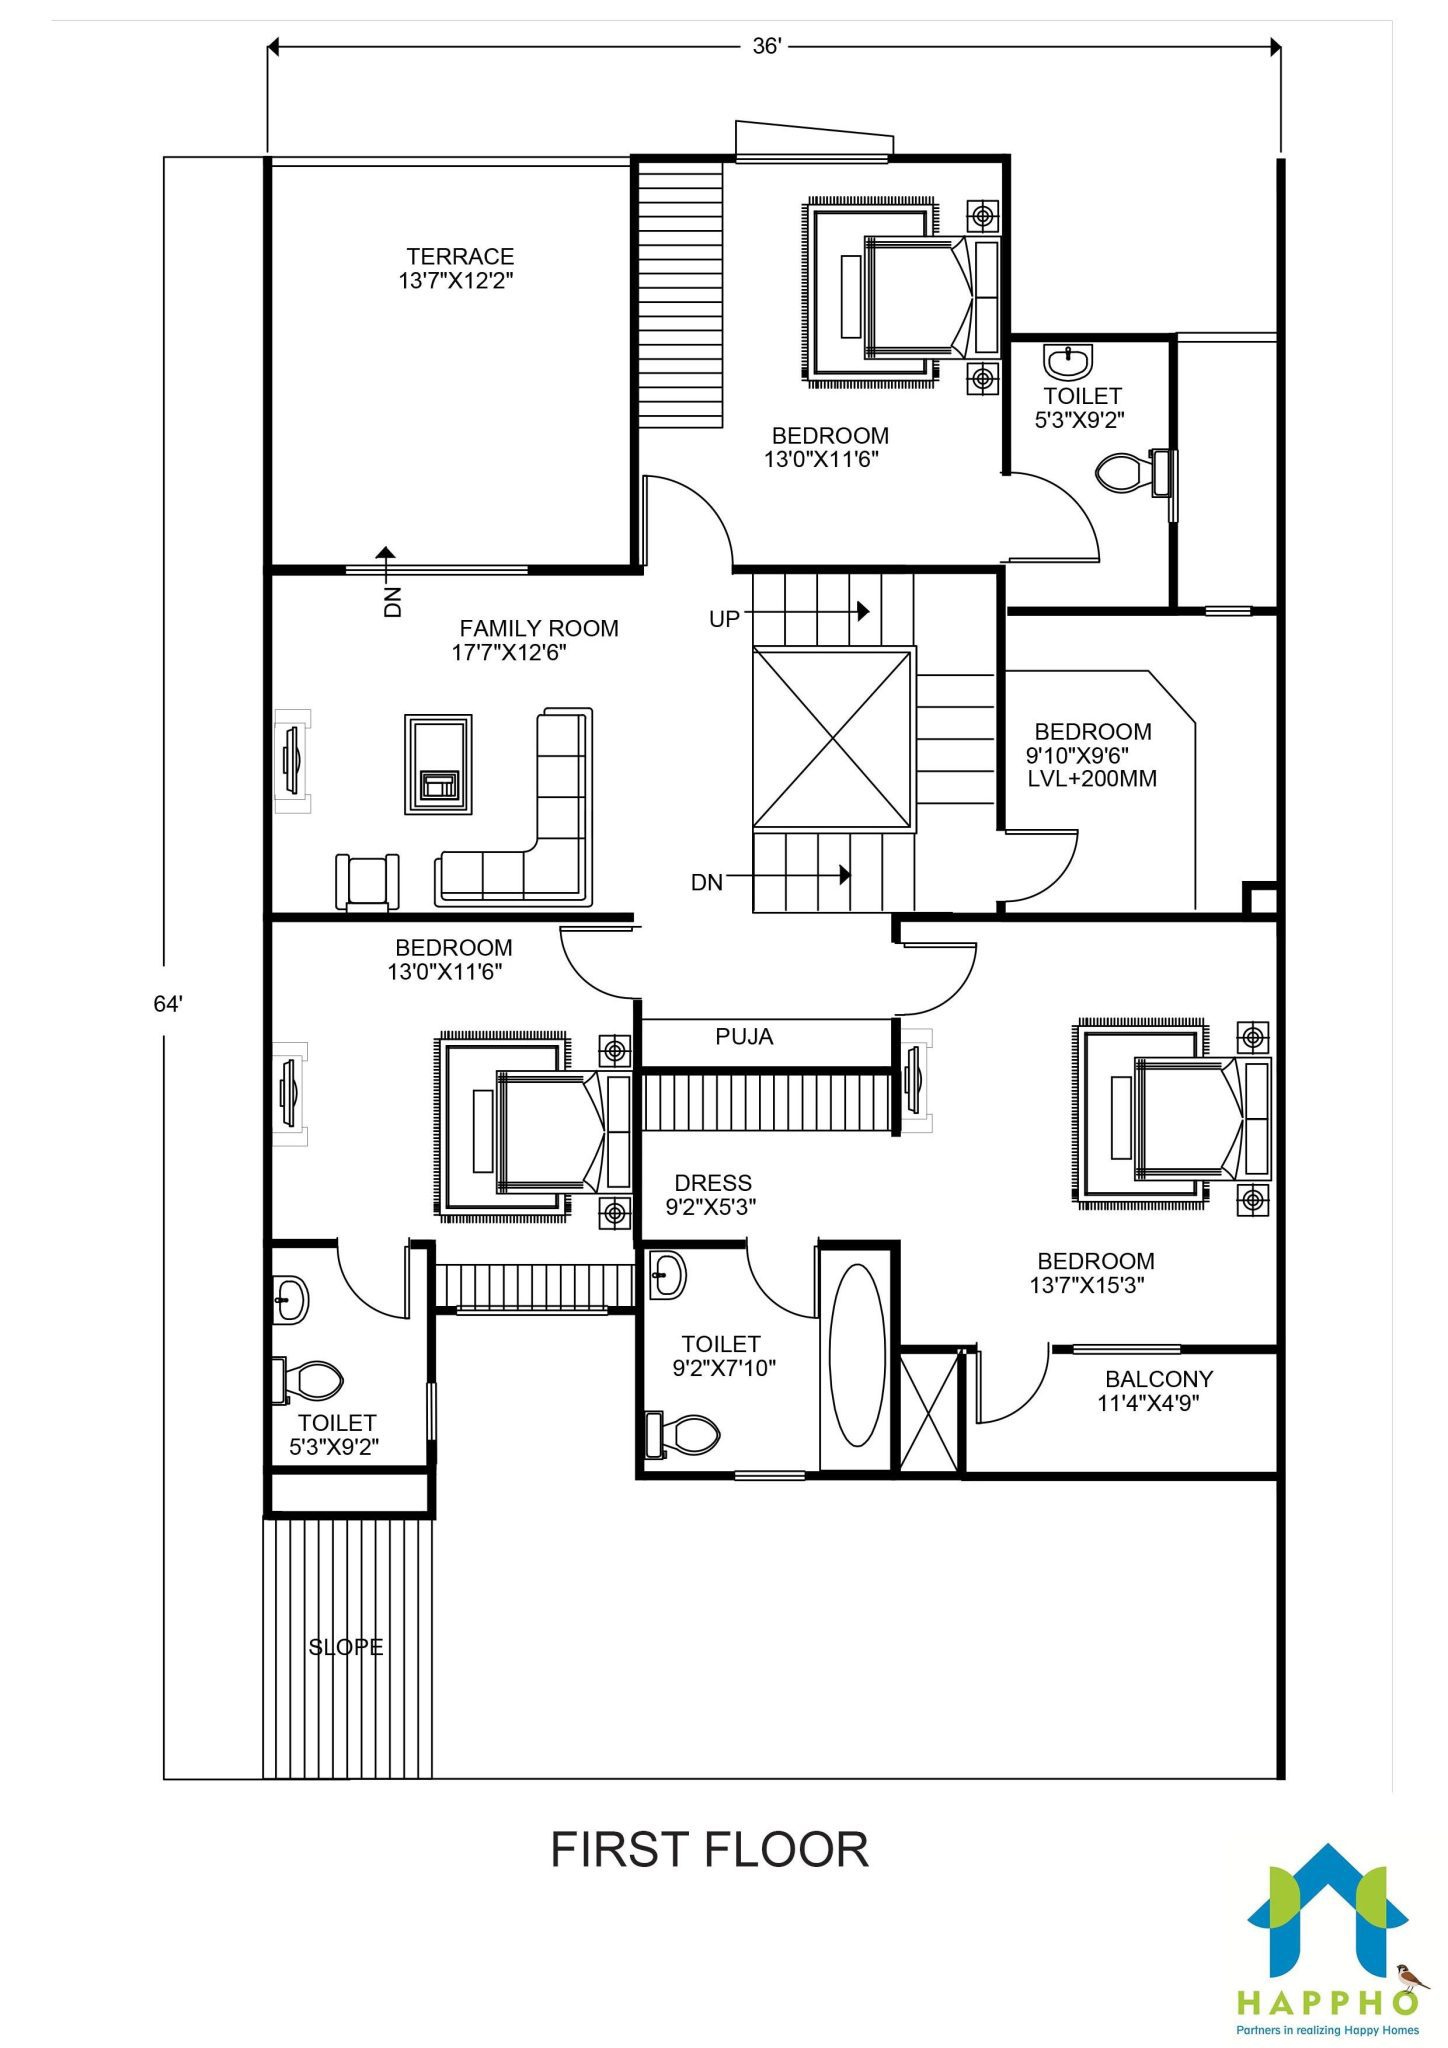 65 x 40 feet, 2600 square feet, 3 Bhk floor plan, Duplex floor plan